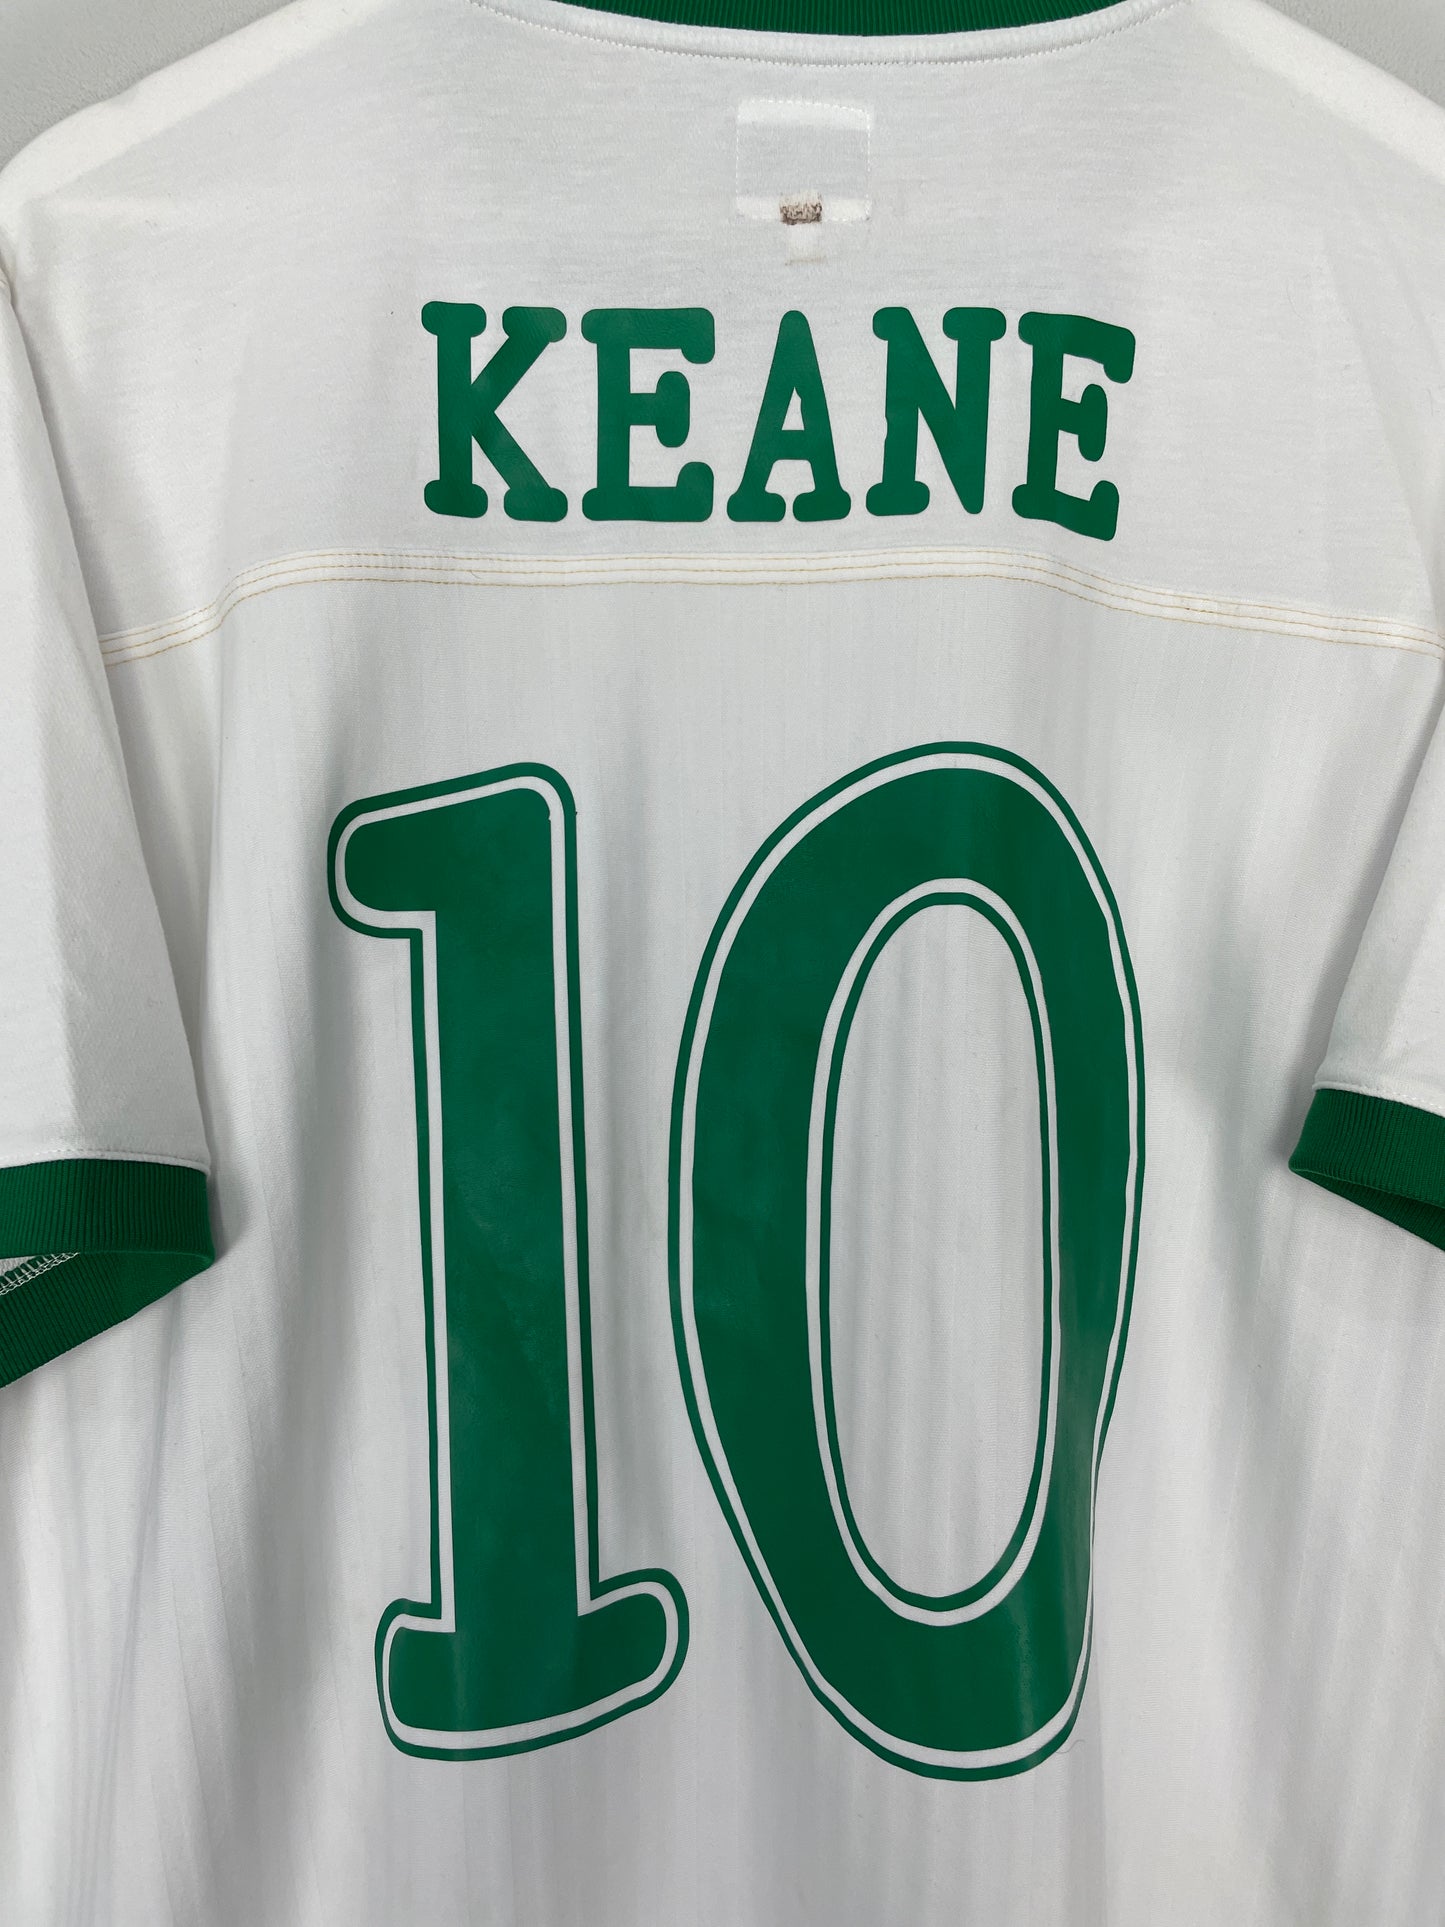 2010/11 IRELAND KEANE #10 HOME SHIRT (XL) UMBRO